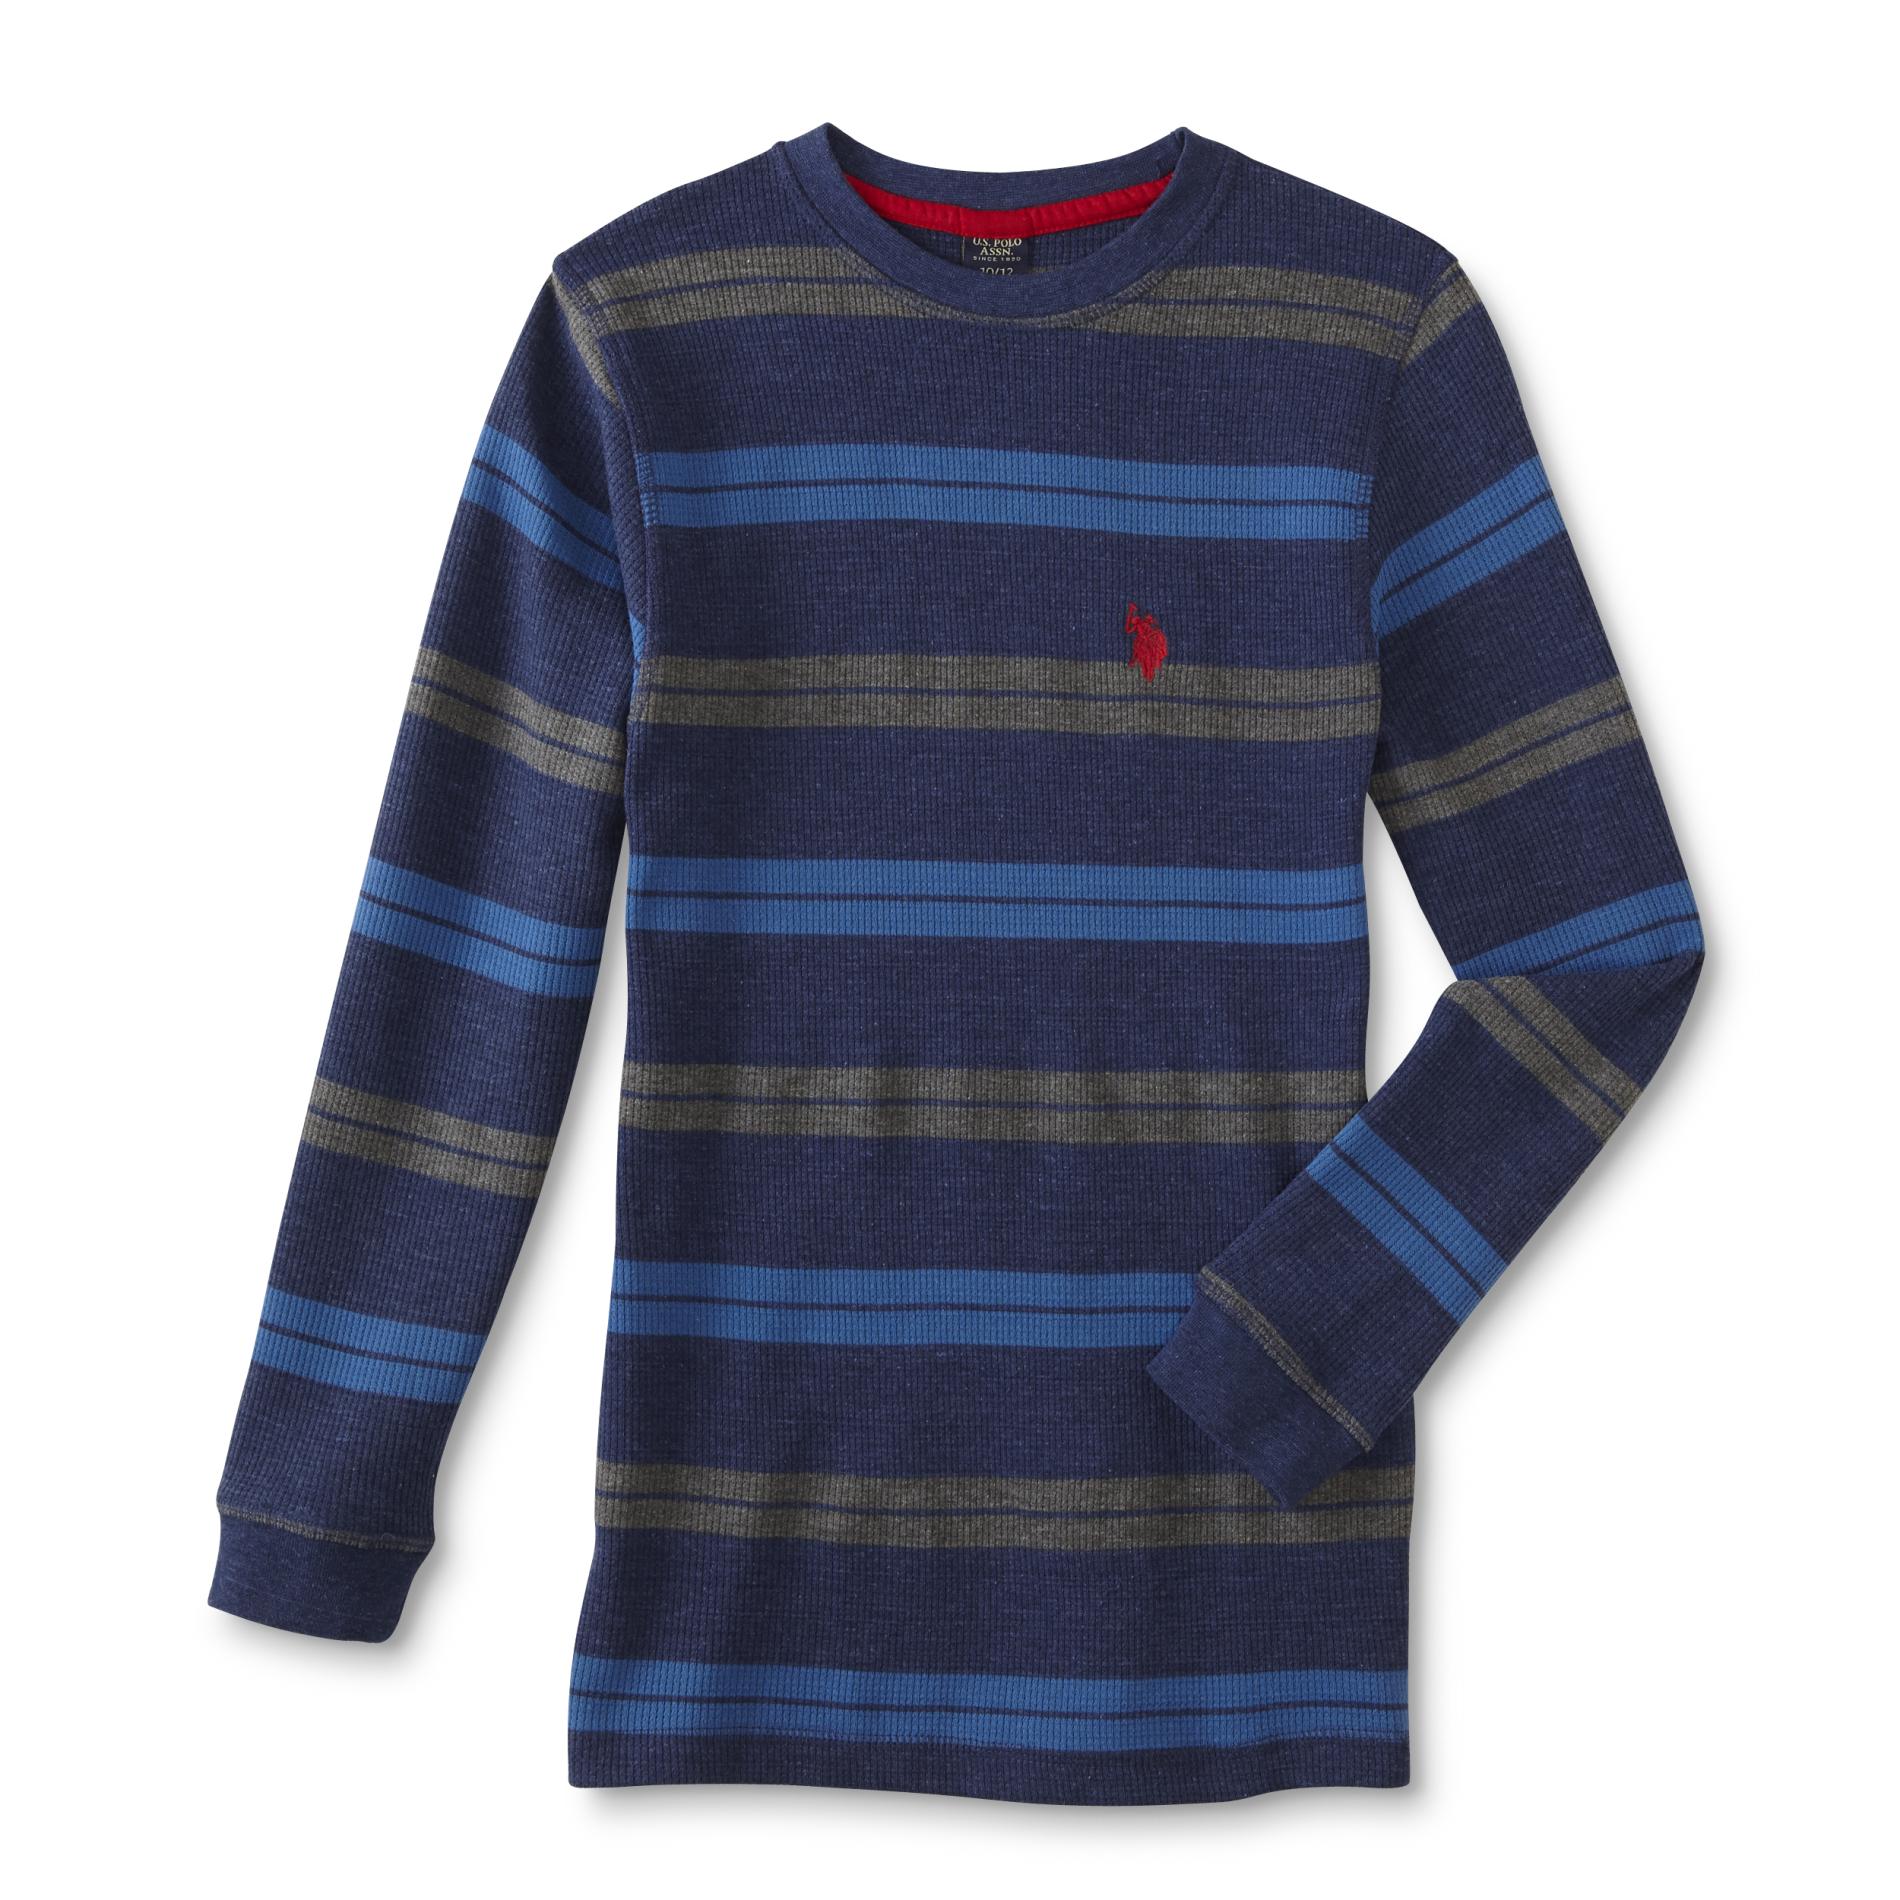 U.S. Polo Assn. Boys' Long-Sleeve Thermal T-Shirt - Striped